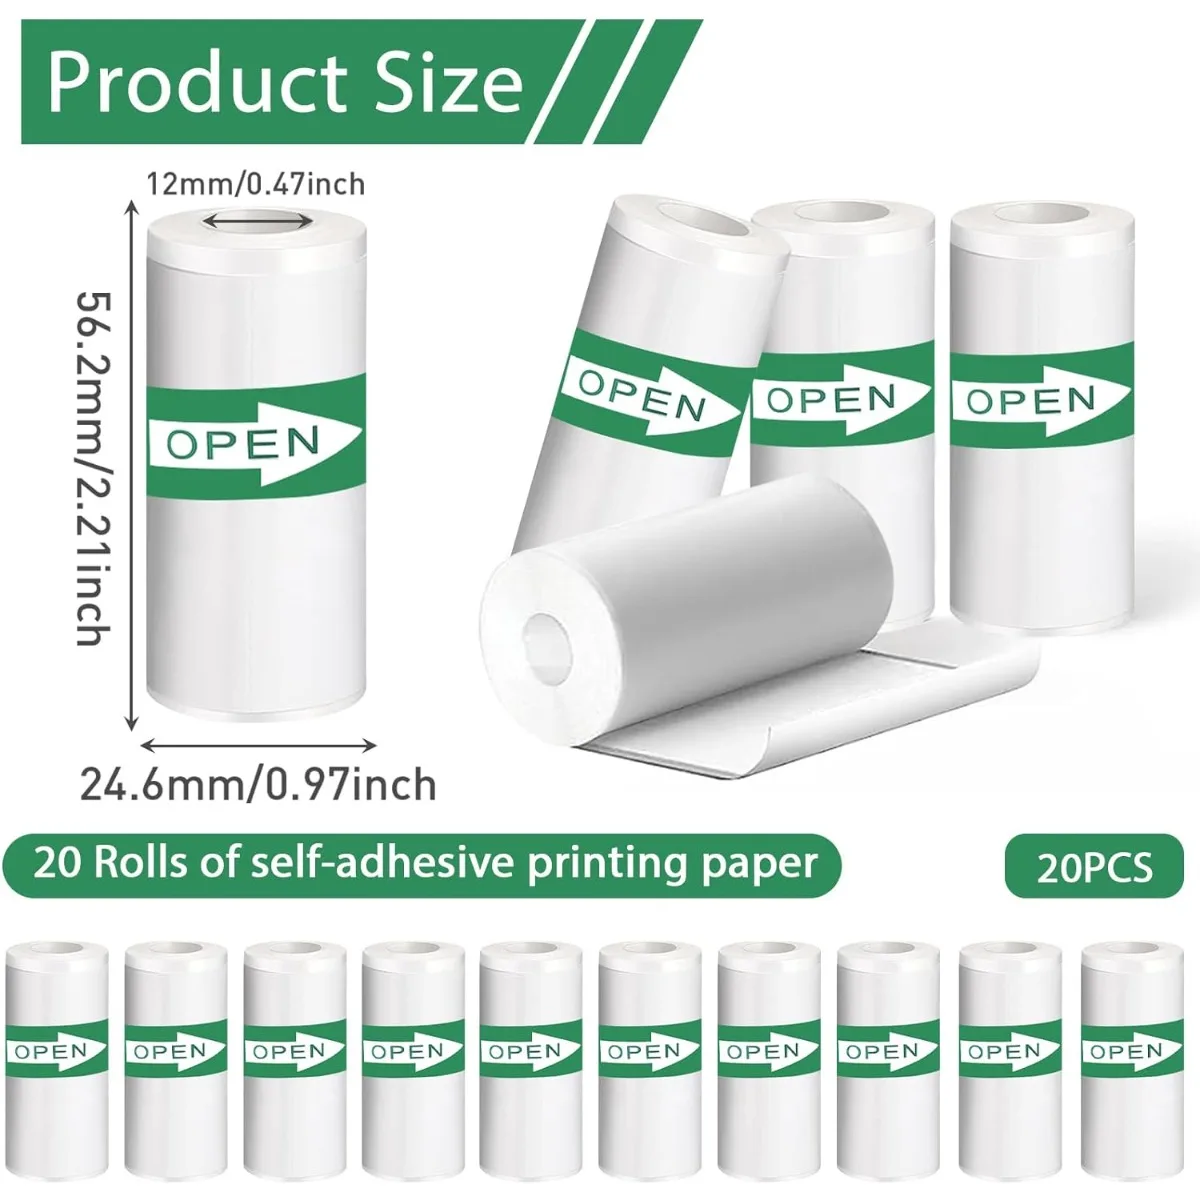 20PCS Mini Printer Paper Thermal Sticker Paper Self-adhesive Printer Paper Photo Printer Labels For Photos Notes 5.7 x 2.5cm